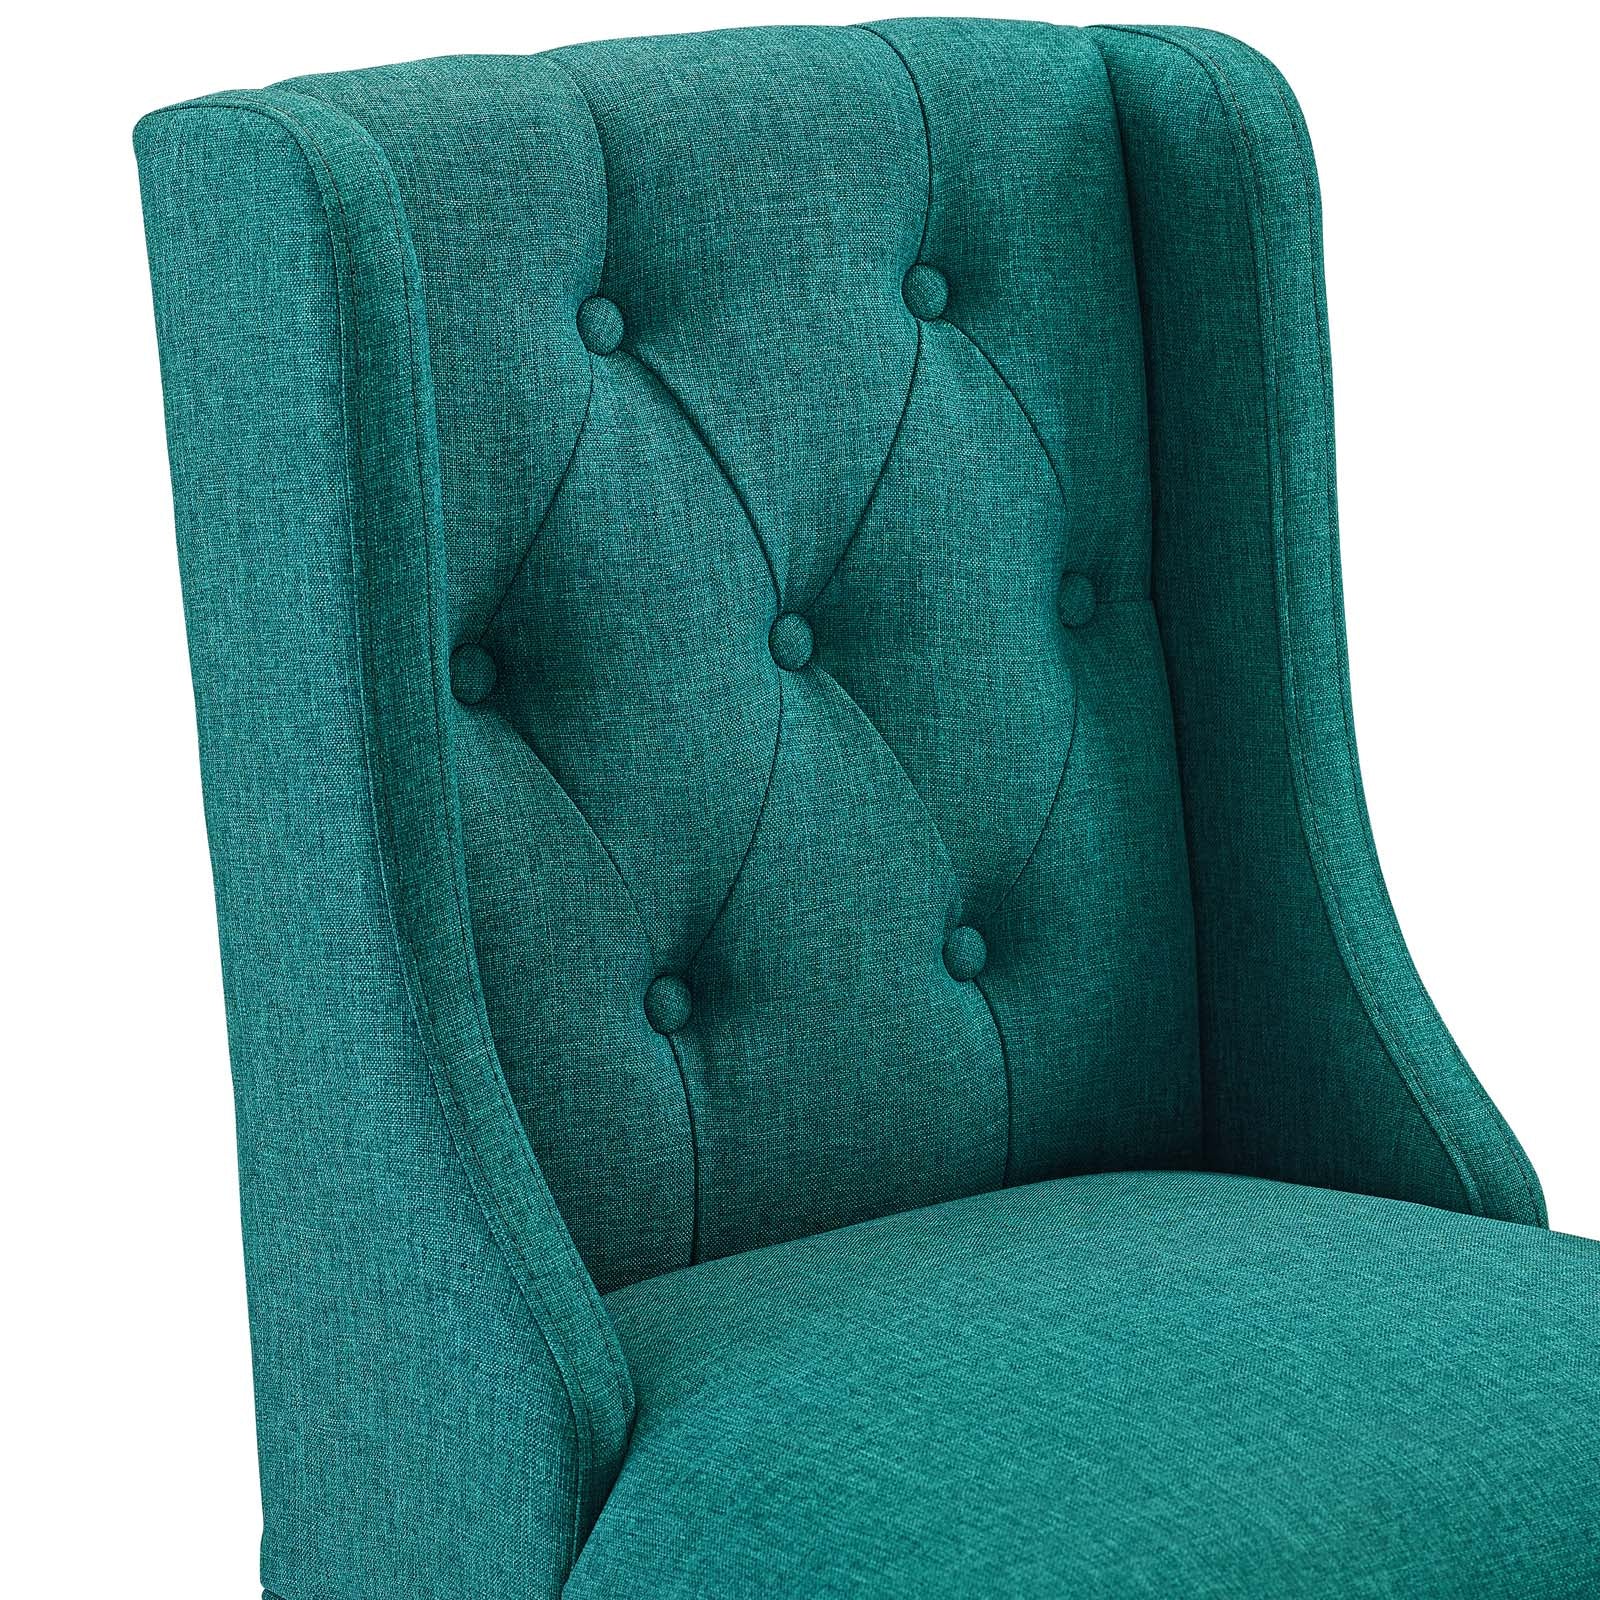 Baronet Counter Bar Stool Upholstered Fabric Set of 2-Counter Stool-Modway-Wall2Wall Furnishings